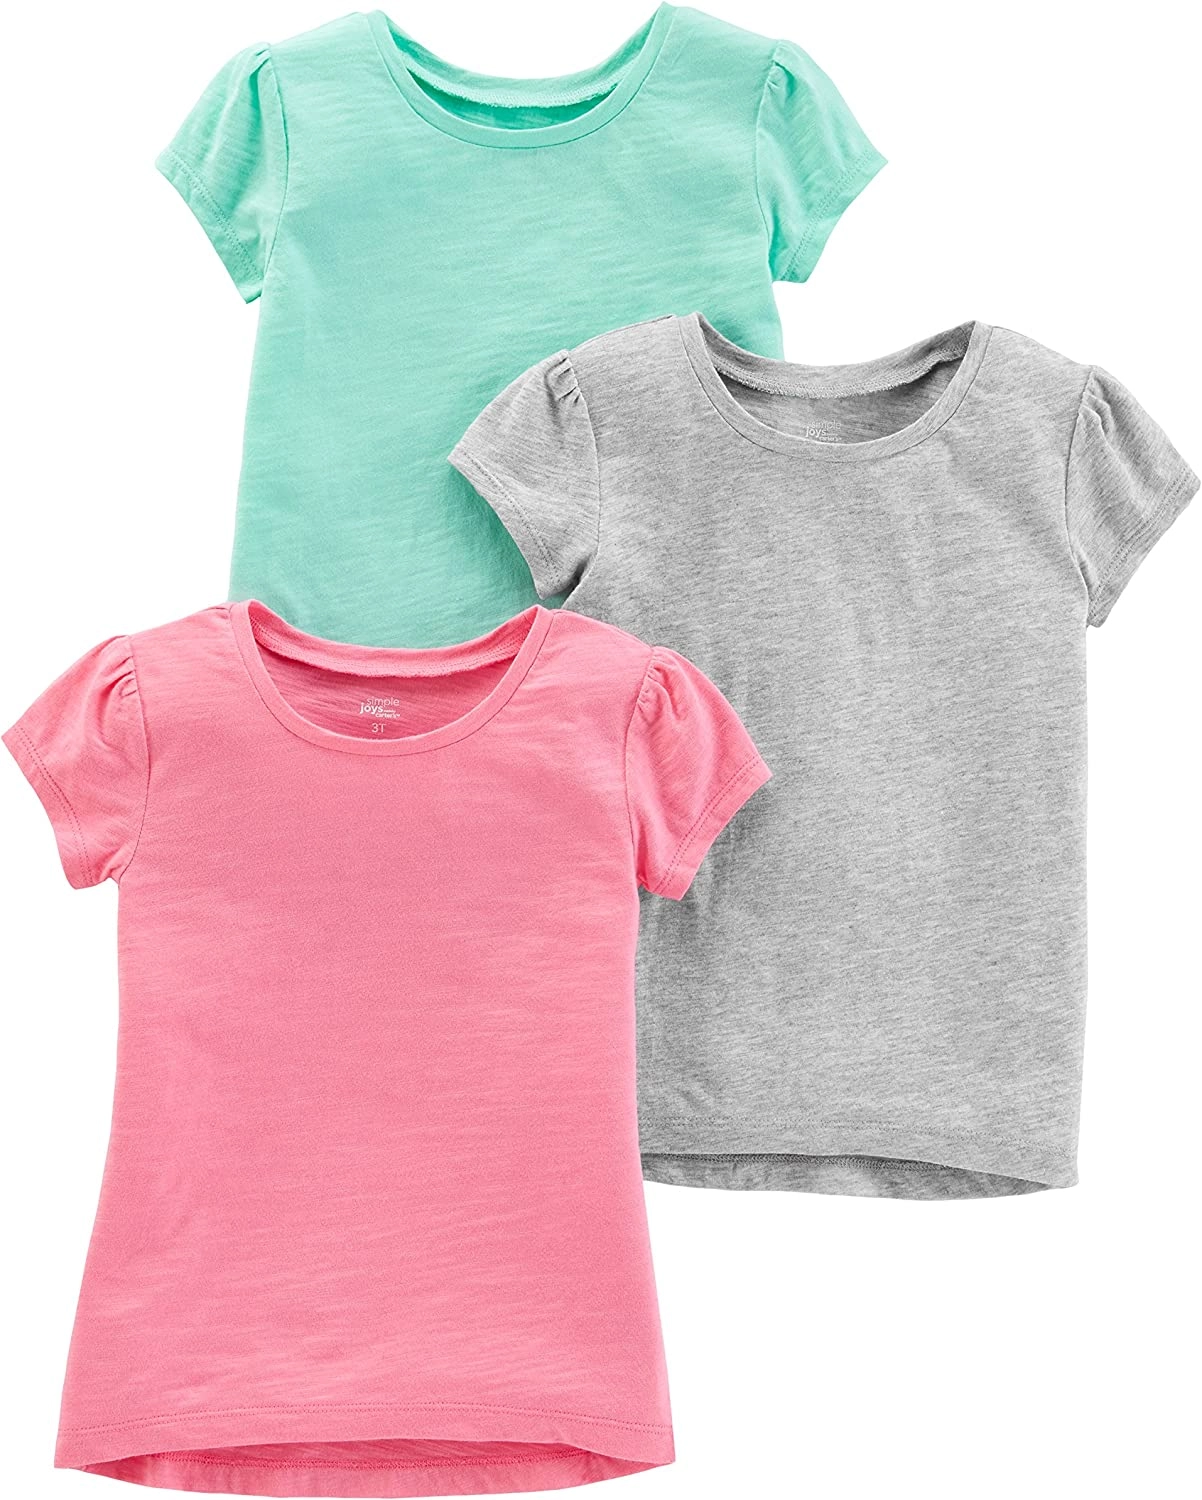 Babies Girls Short Sleeve Tee Shirts From Bangladesh Kidswear Factory